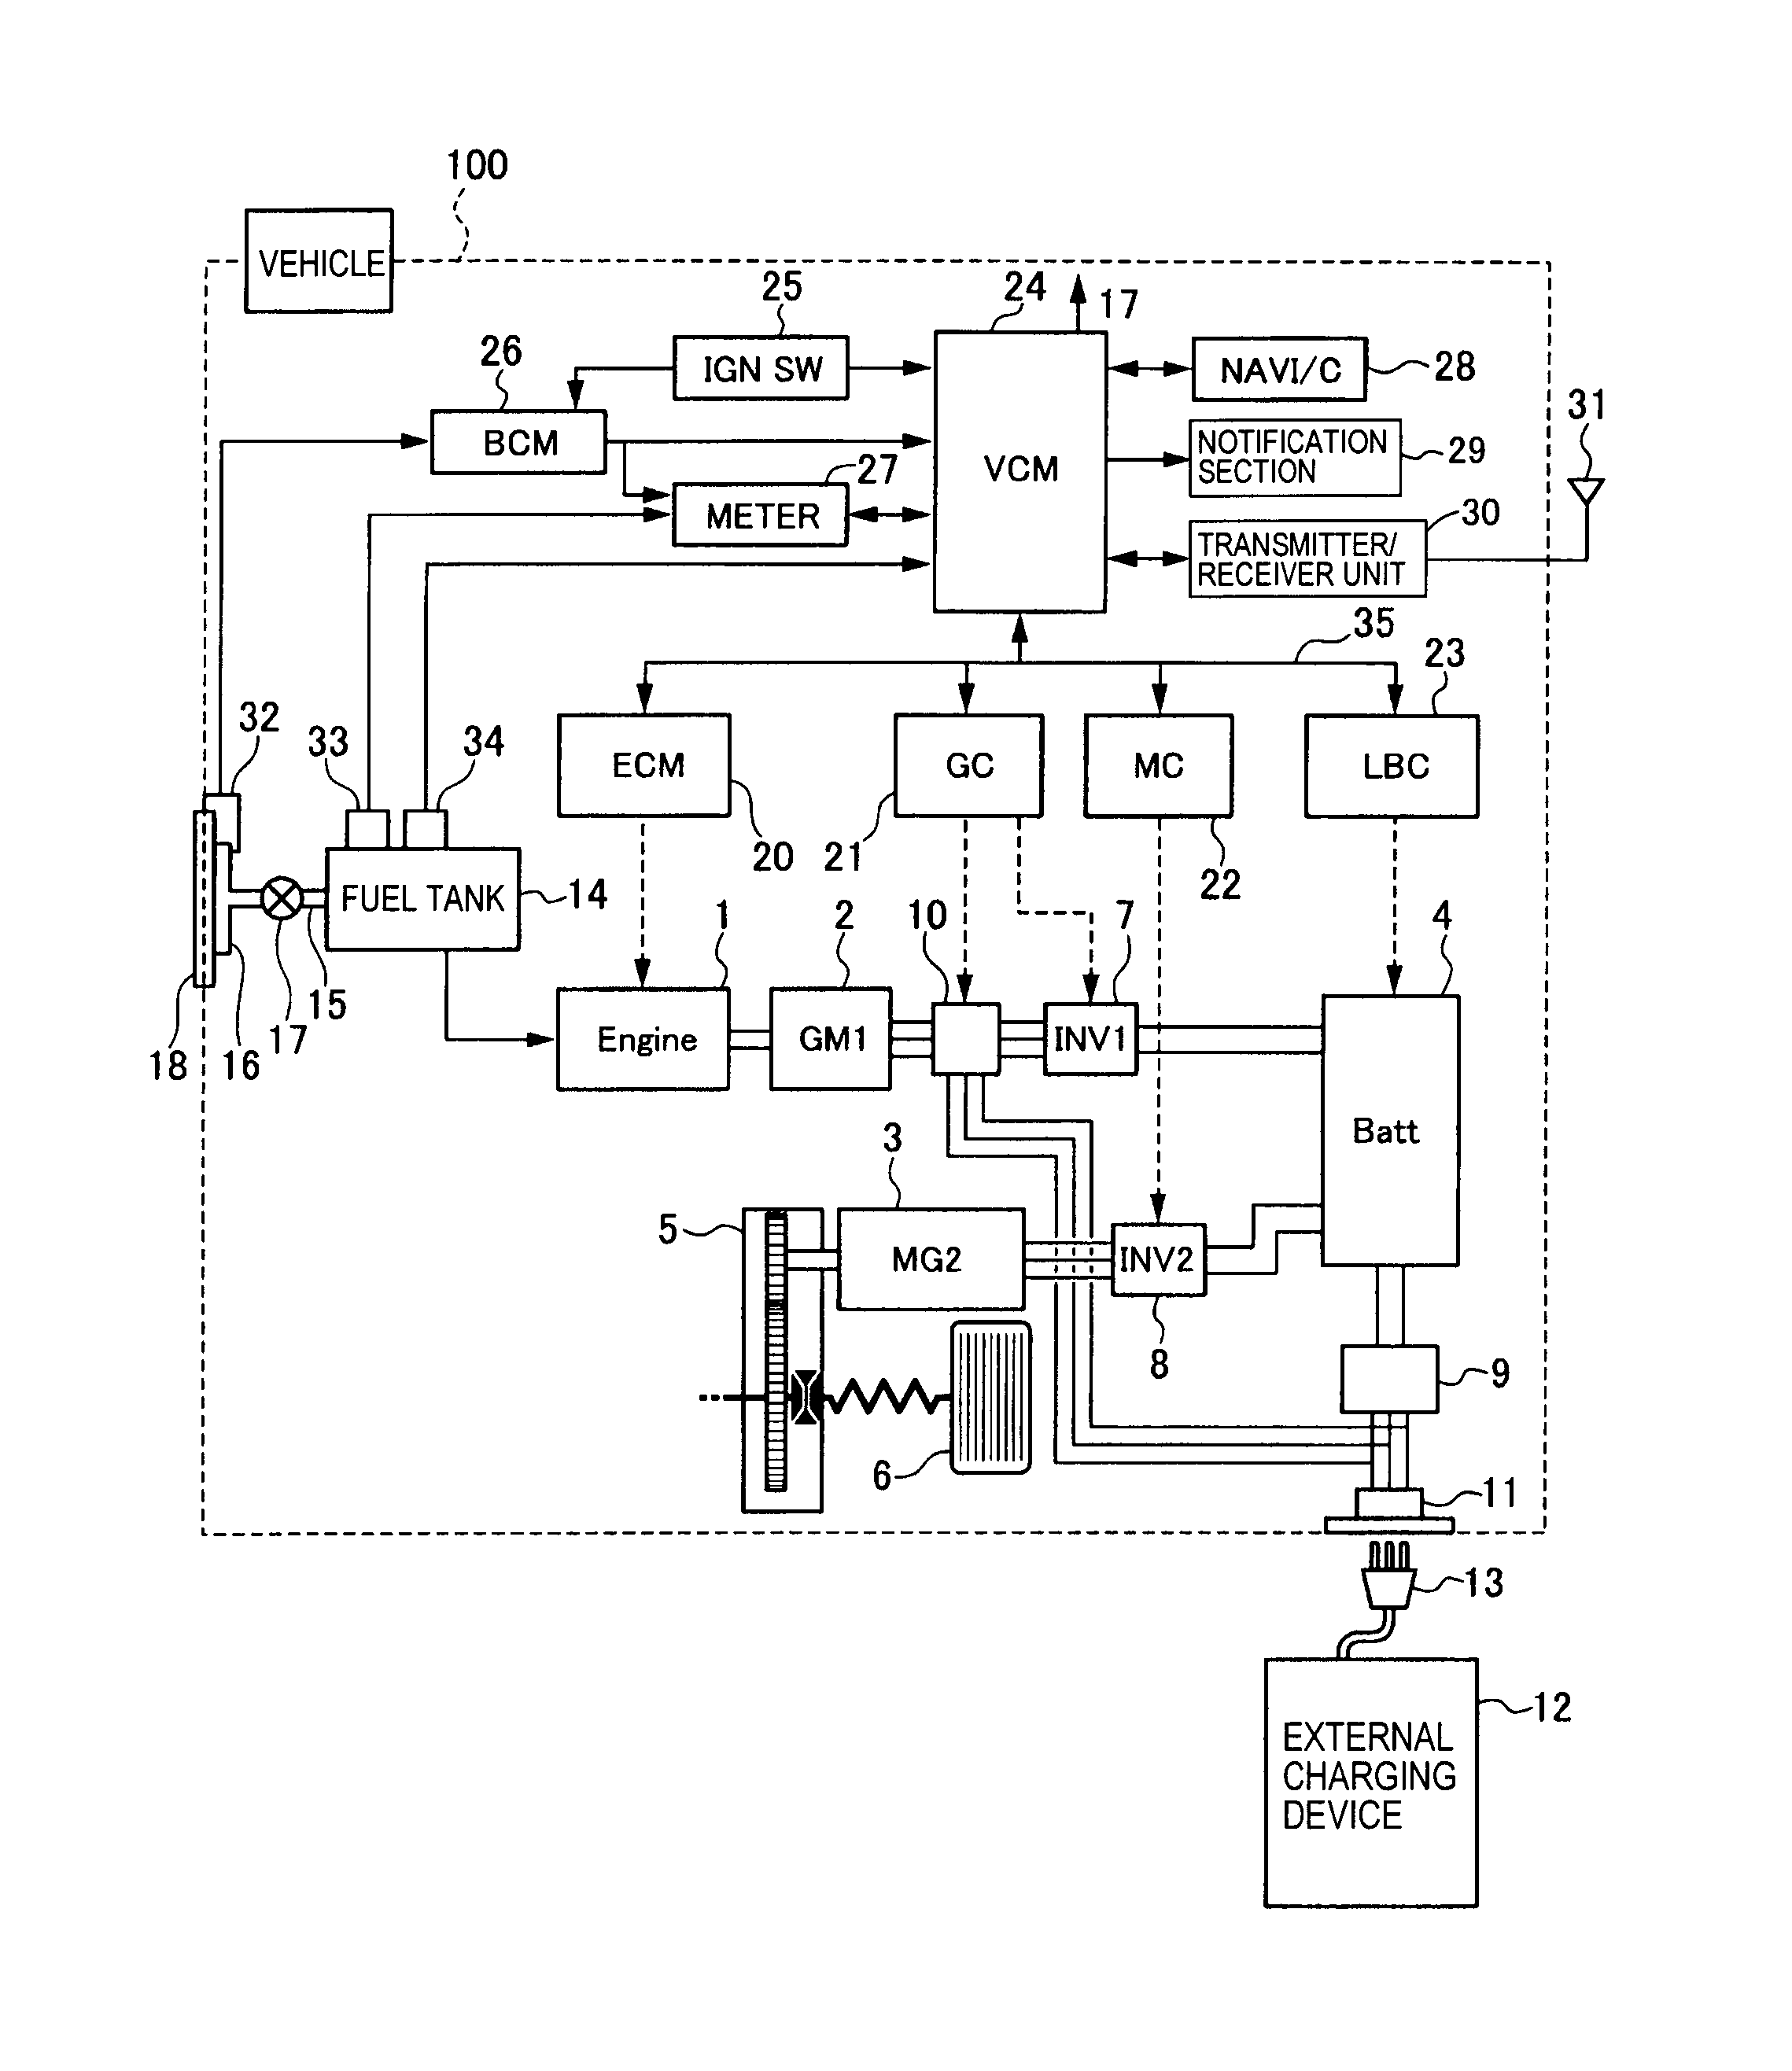 mallory tachometer wiring diagram